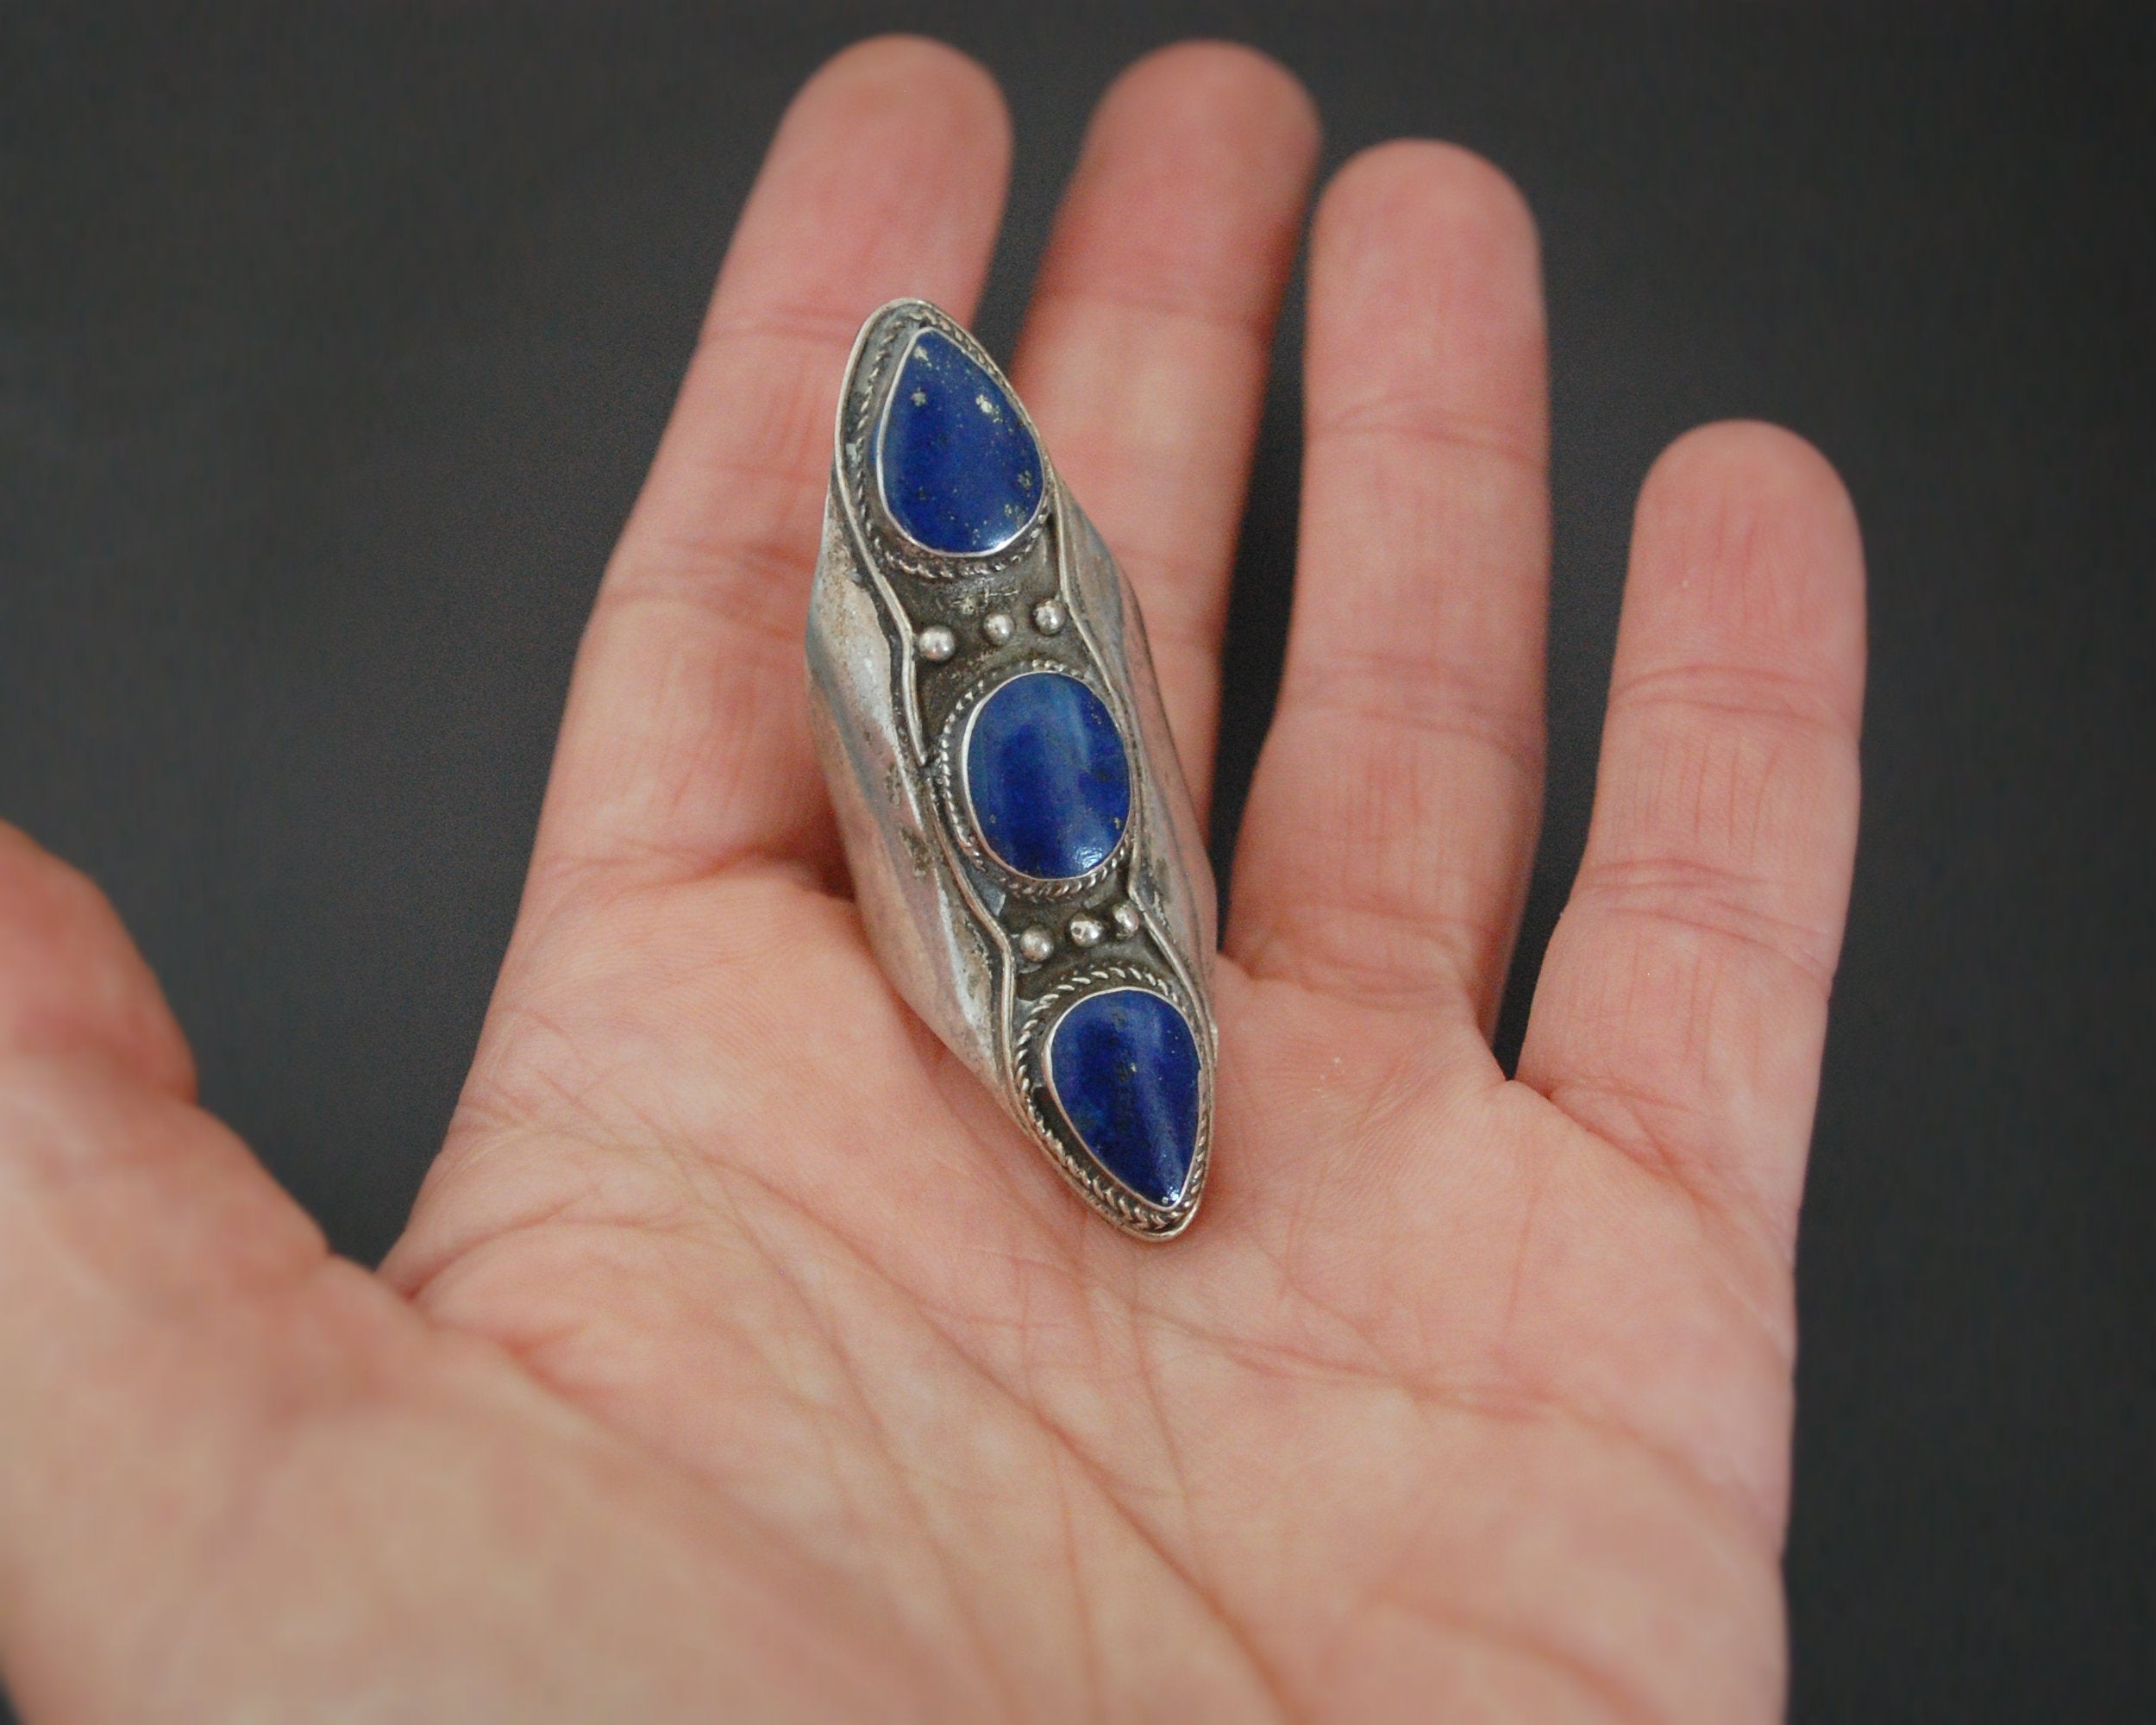 Vintage Nepali Lapis Lazuli Ring - Size 8.25